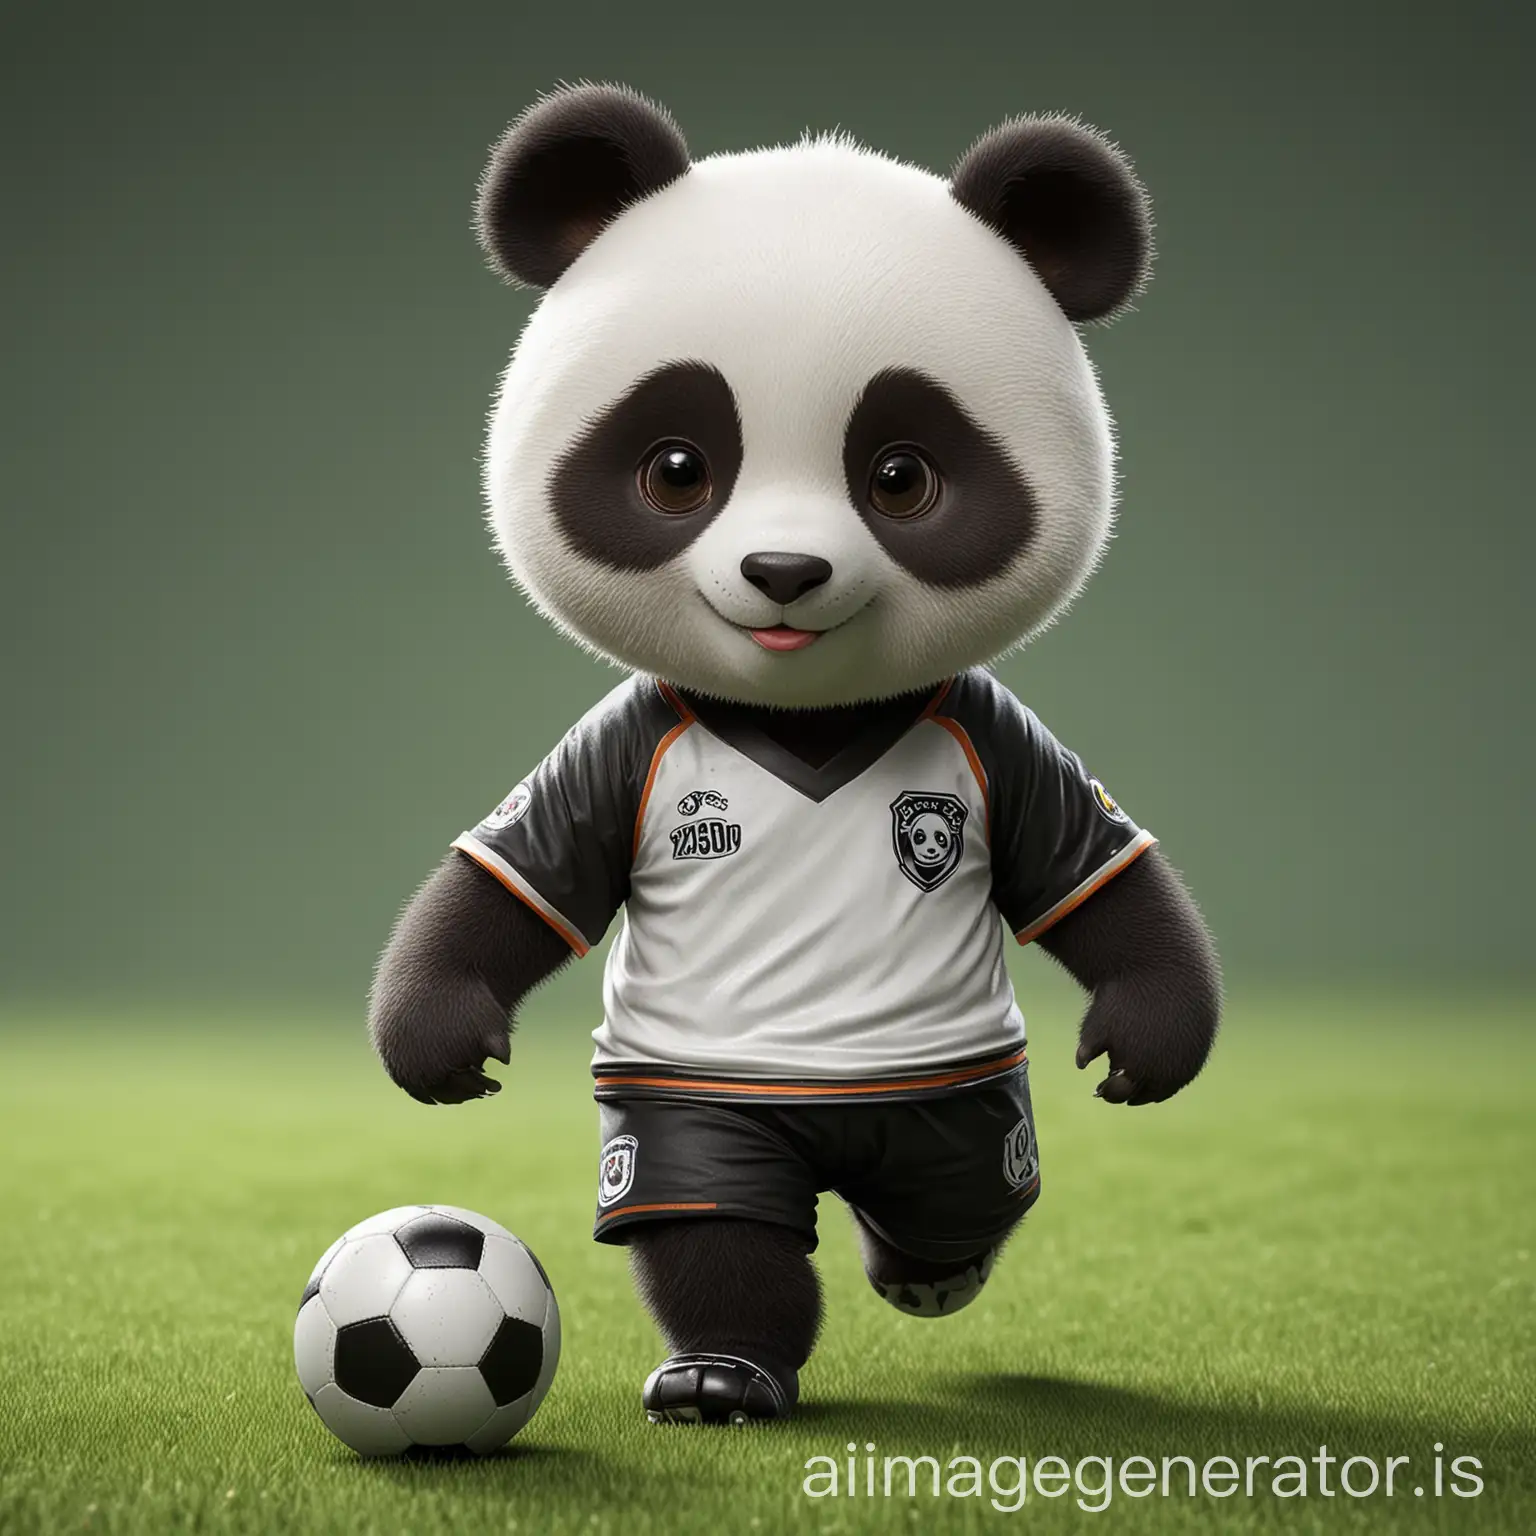 cute cool  3d panda soccer player  Put on  soccer uniform  soccer game attire. walking